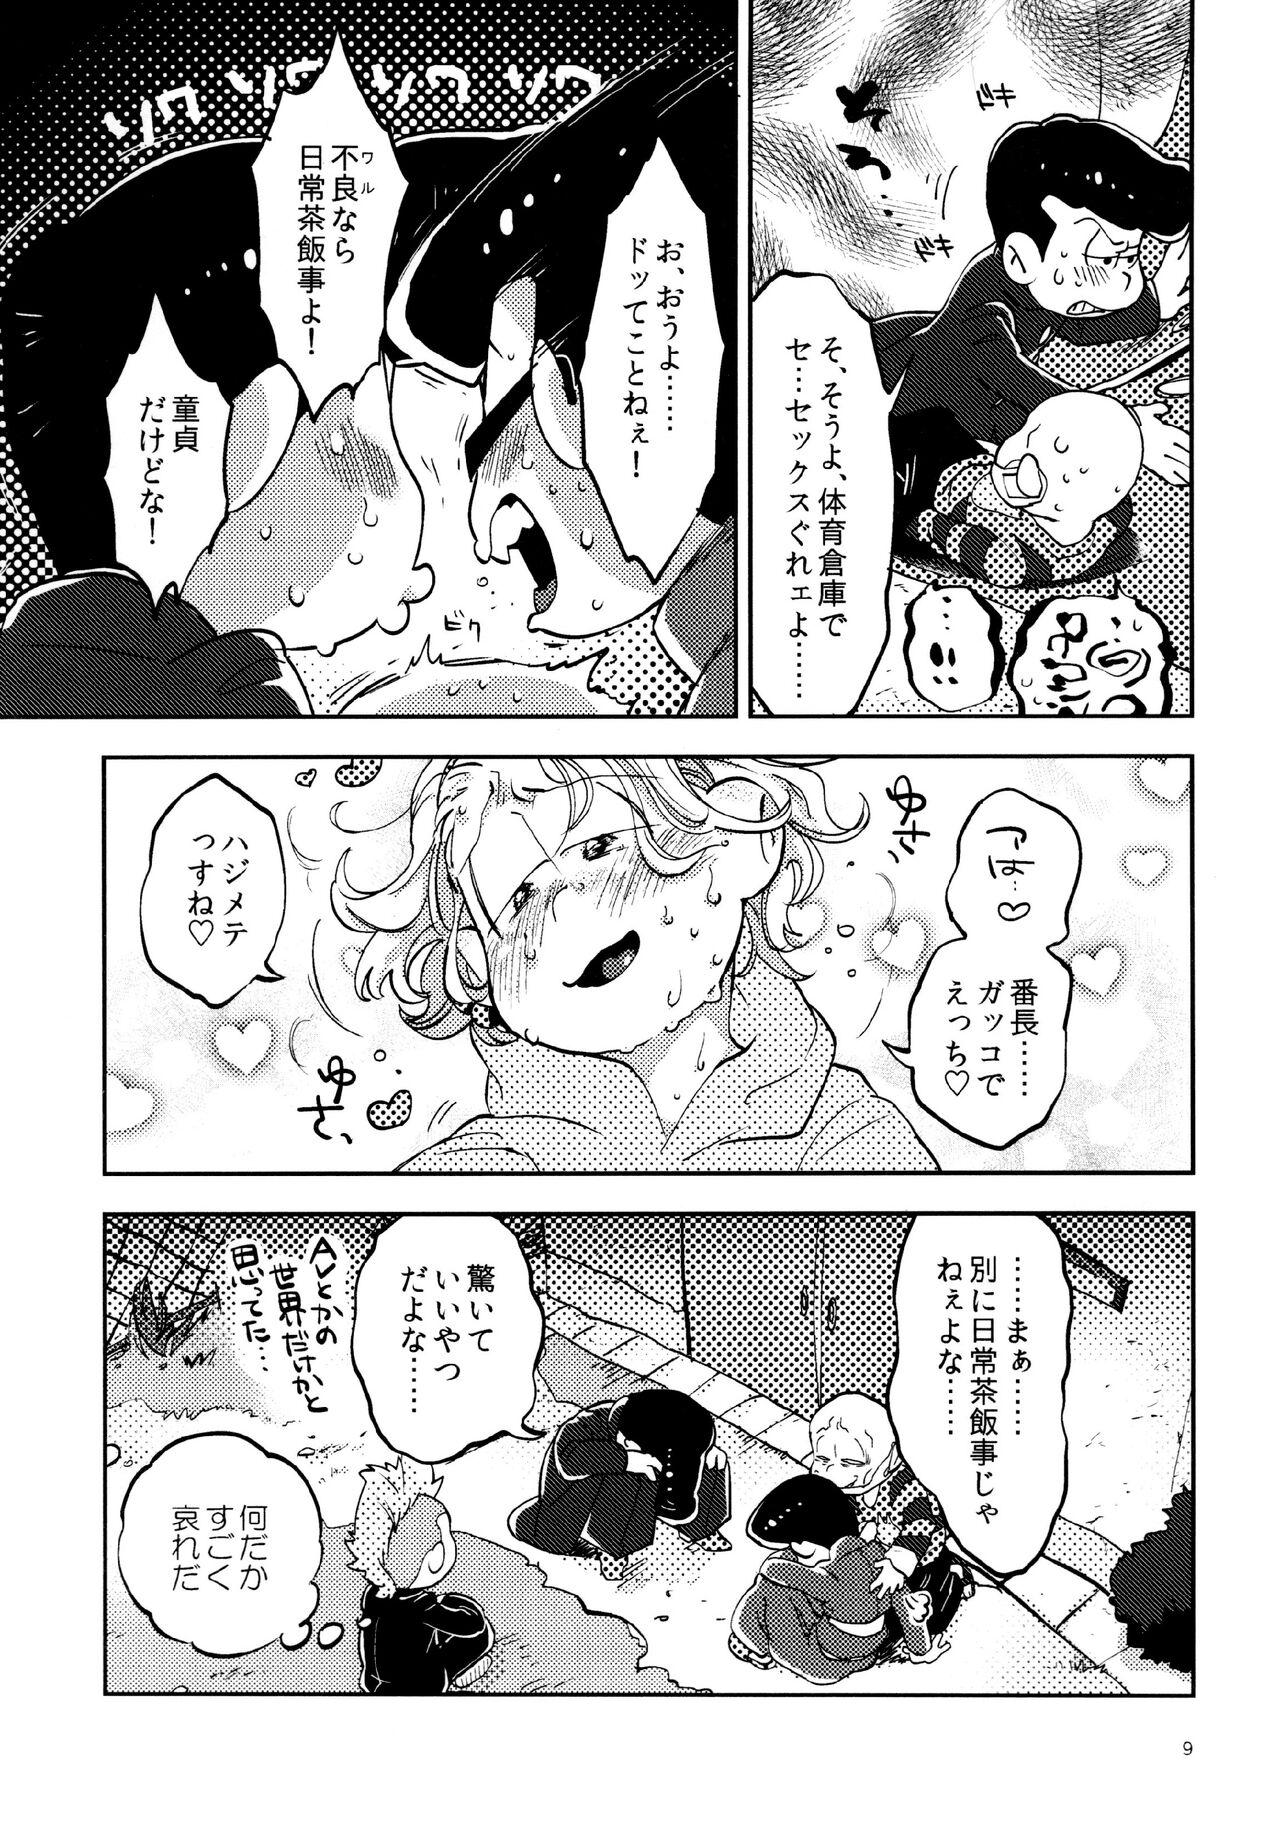 Gay Medical Amaebitamago (gyuunyuu) gaman joutou airabuyuu (Osomatsu-san) - Osomatsu san Parody - Page 9